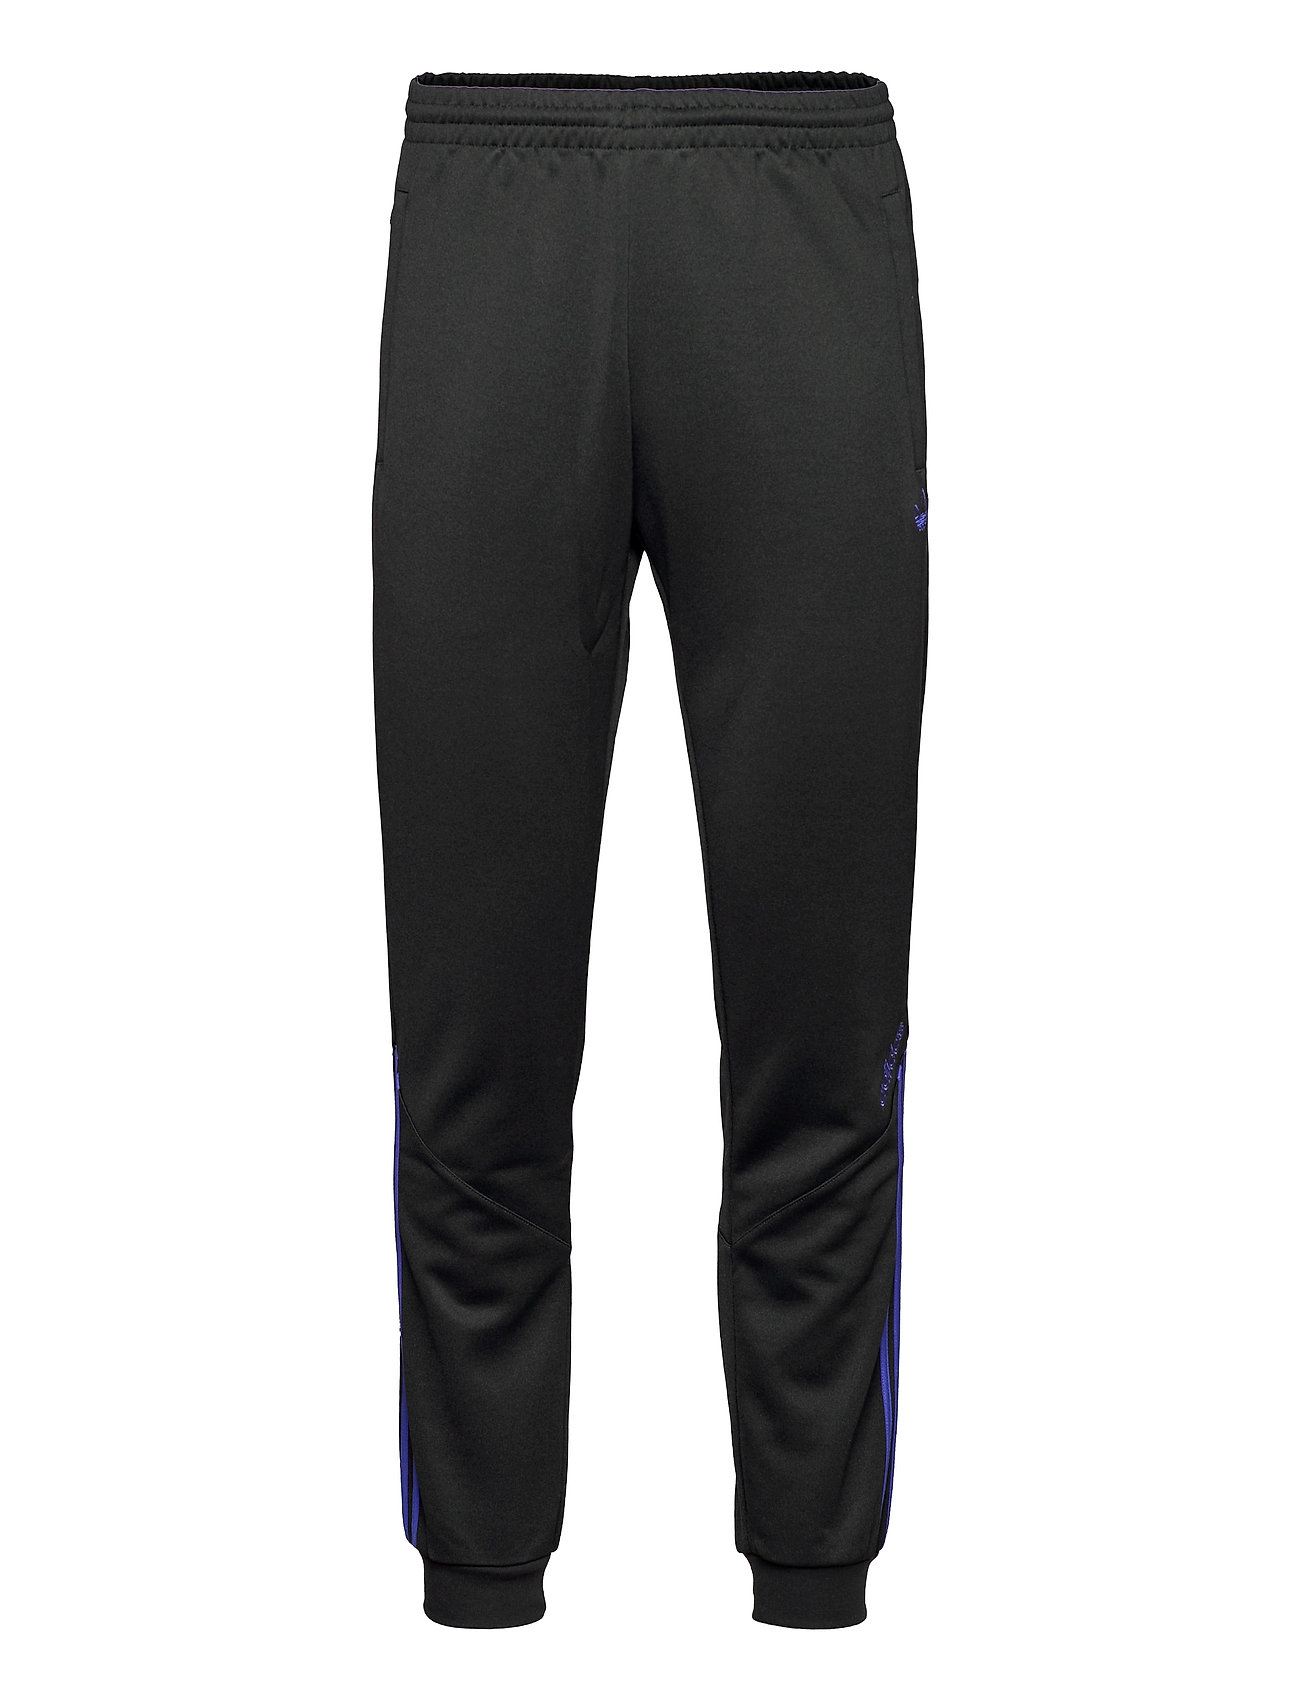 Sprt Colorblock Track Pants Collegehousut Olohousut Musta Adidas Originals, adidas Originals